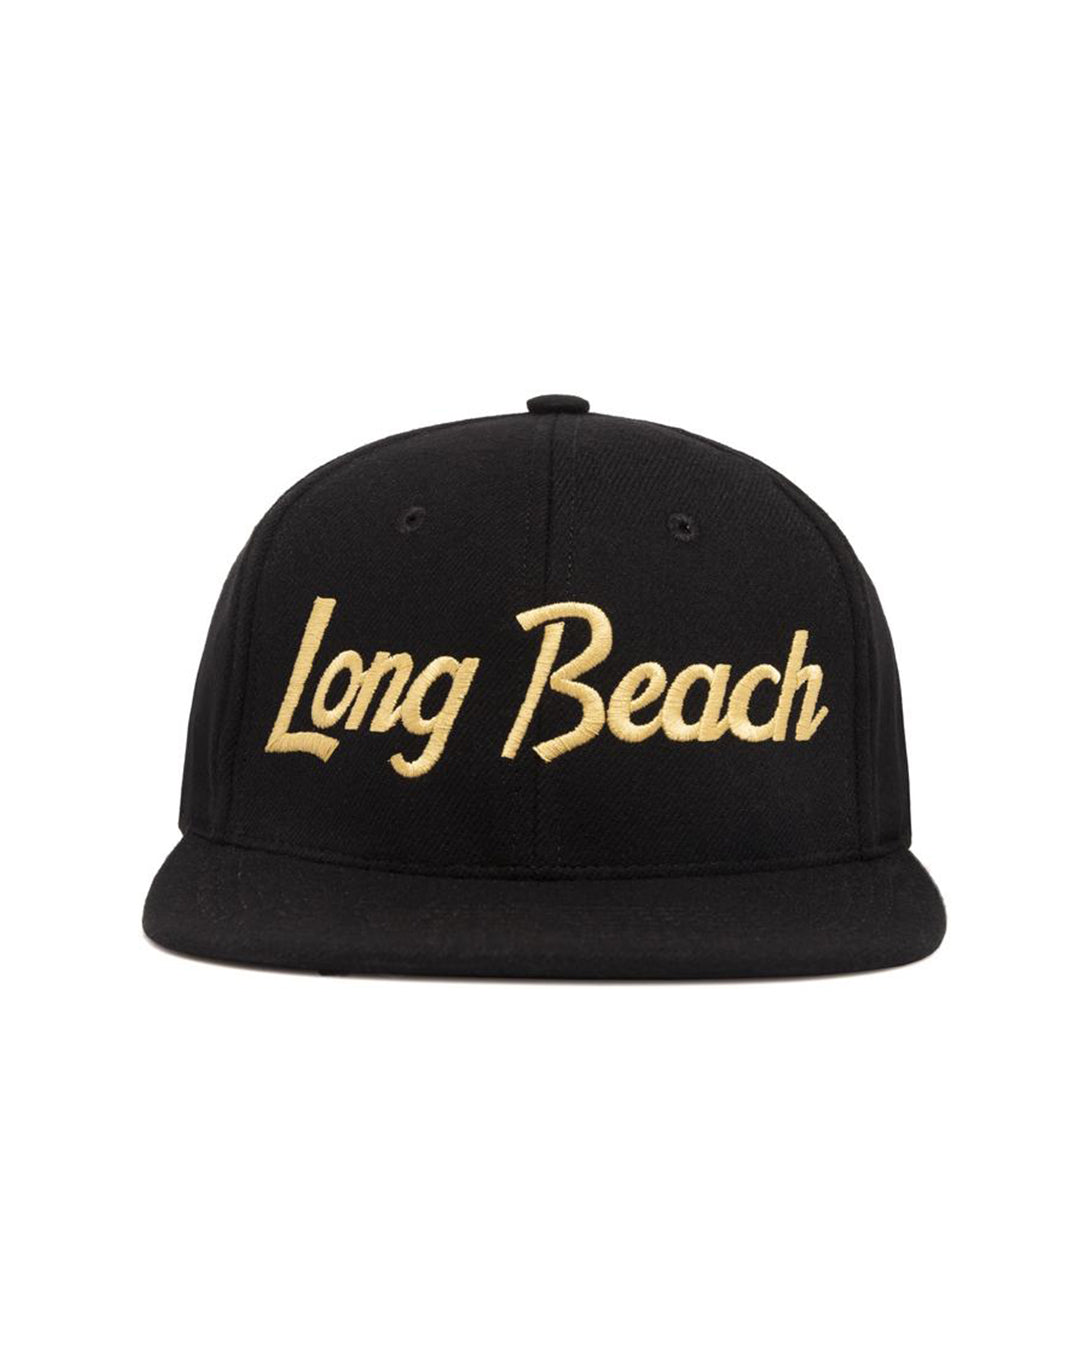 HOOD HAT / LONG BEACH (BLACK / 14K GOLD)